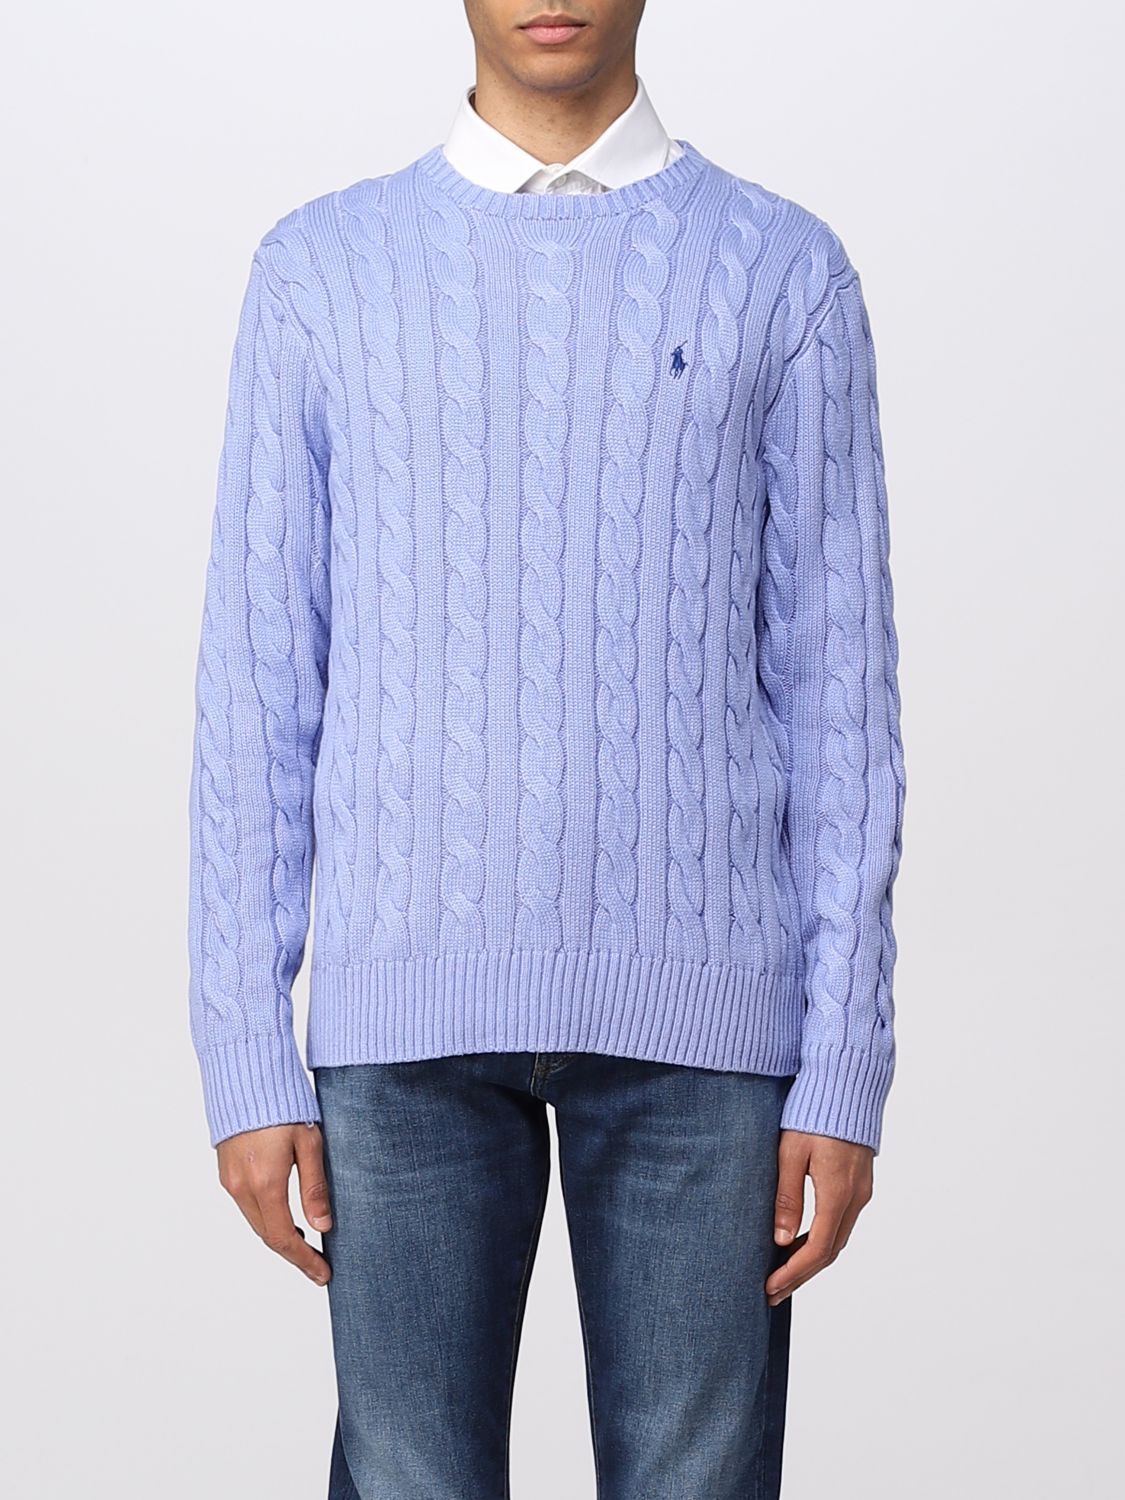 POLO RALPH LAUREN: sweater for man - Blue 1 | Polo Ralph Lauren sweater  710775885 online on 